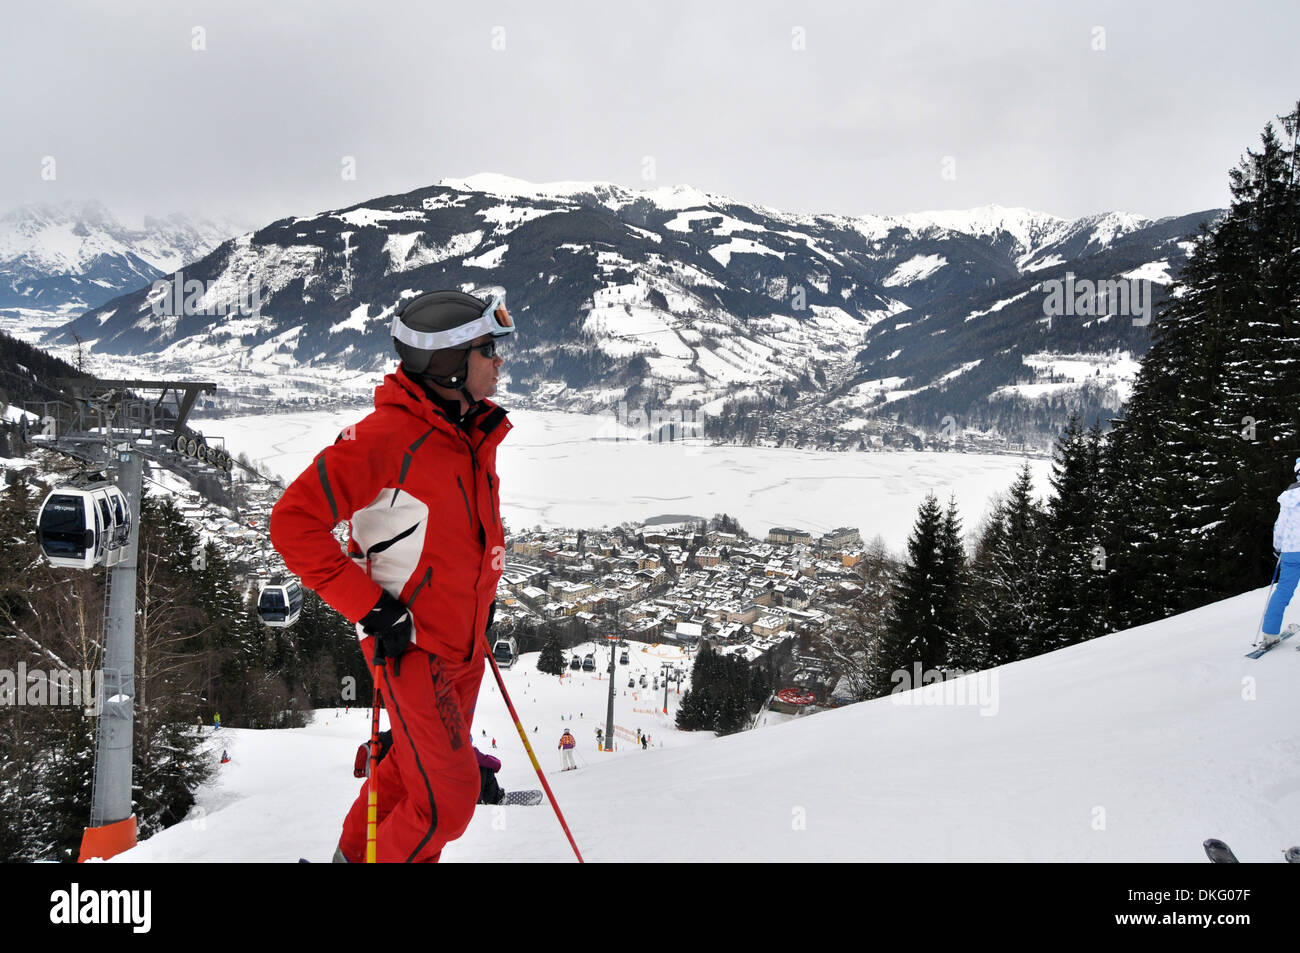 Roter skianzug -Fotos und -Bildmaterial in hoher Auflösung – Alamy